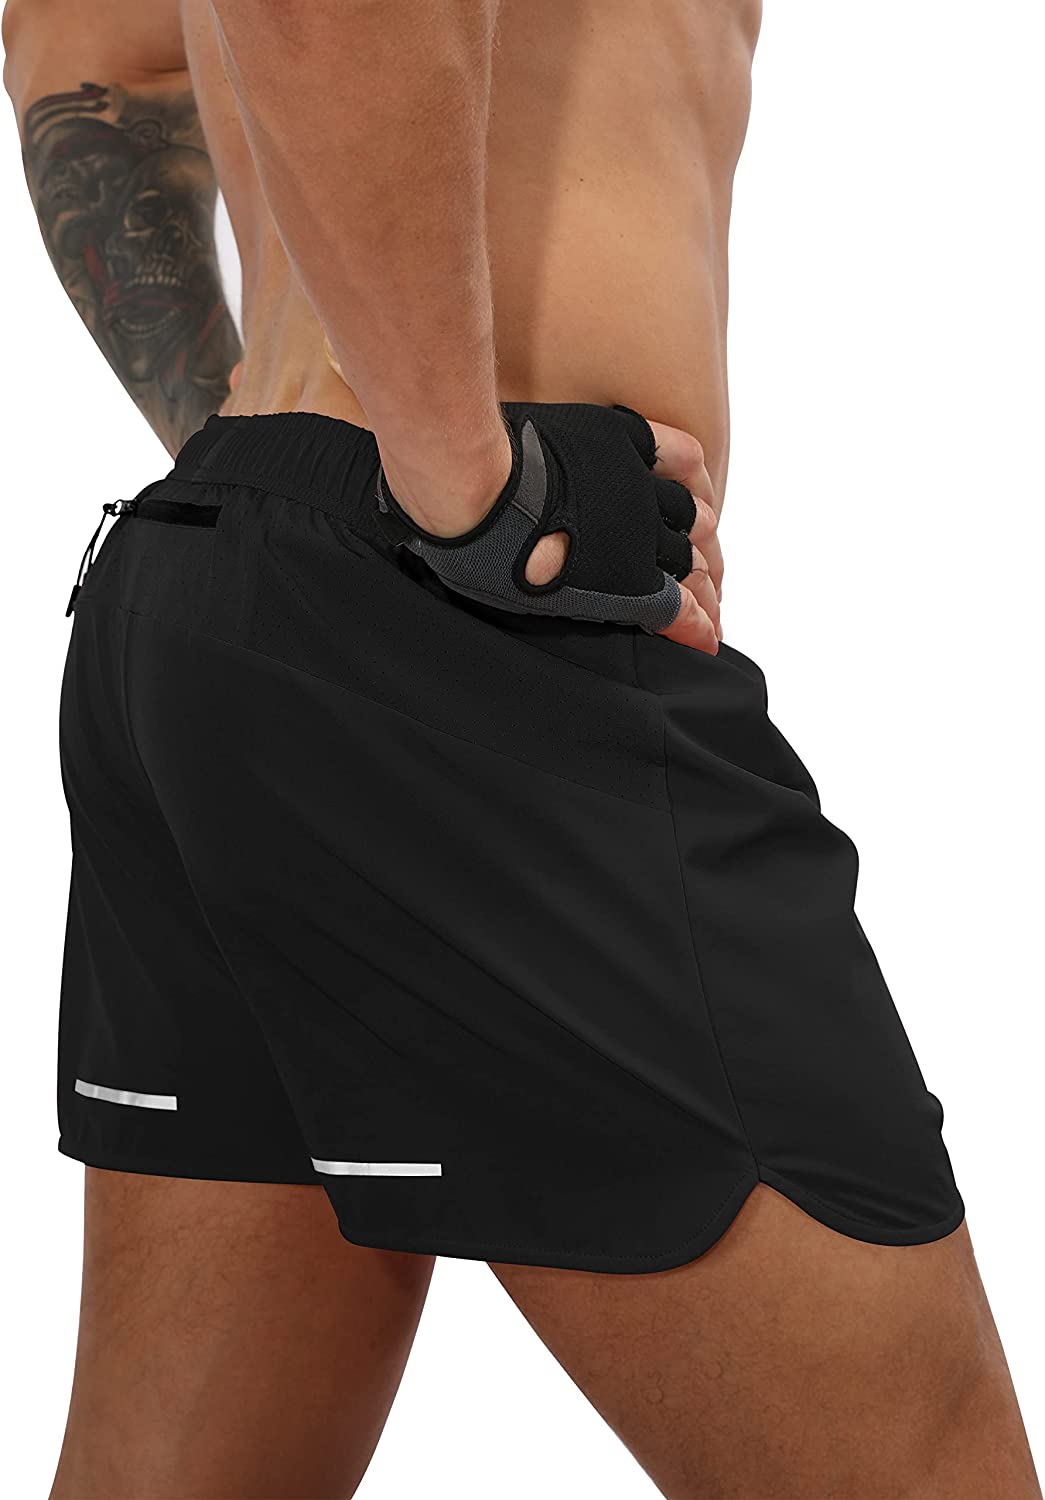 ODODOS Men's 3 Running Shorts with Back Zipper Pocket Quick Dry